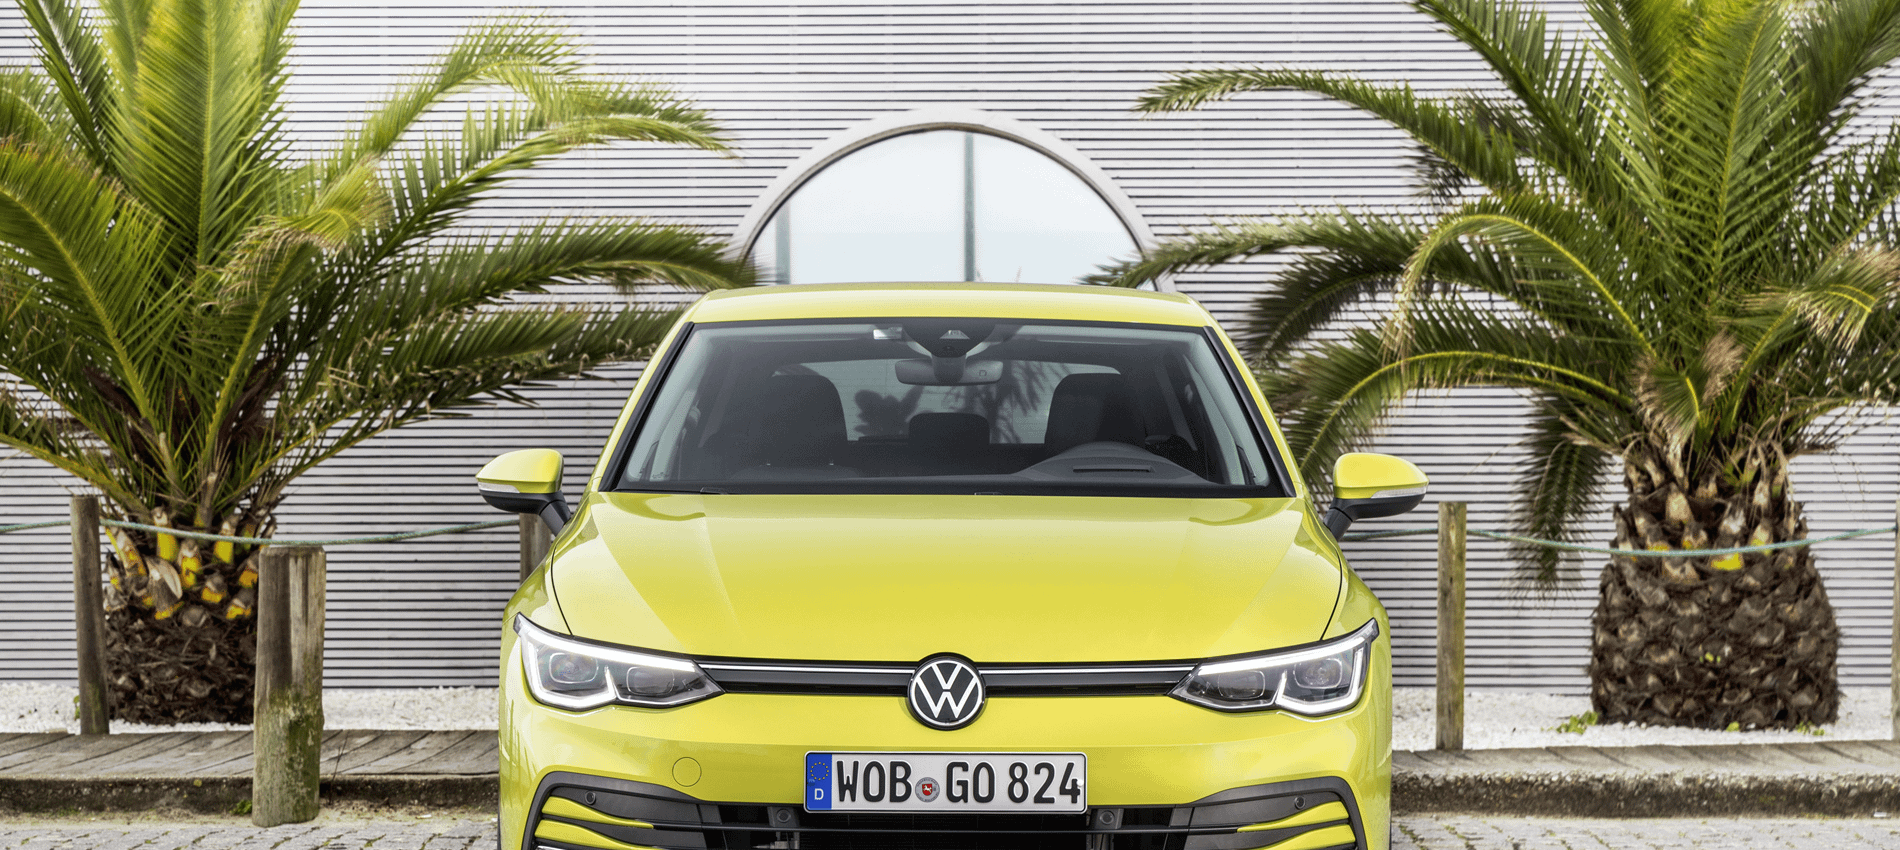 New Volkswagen Golf 8 Style 2020 